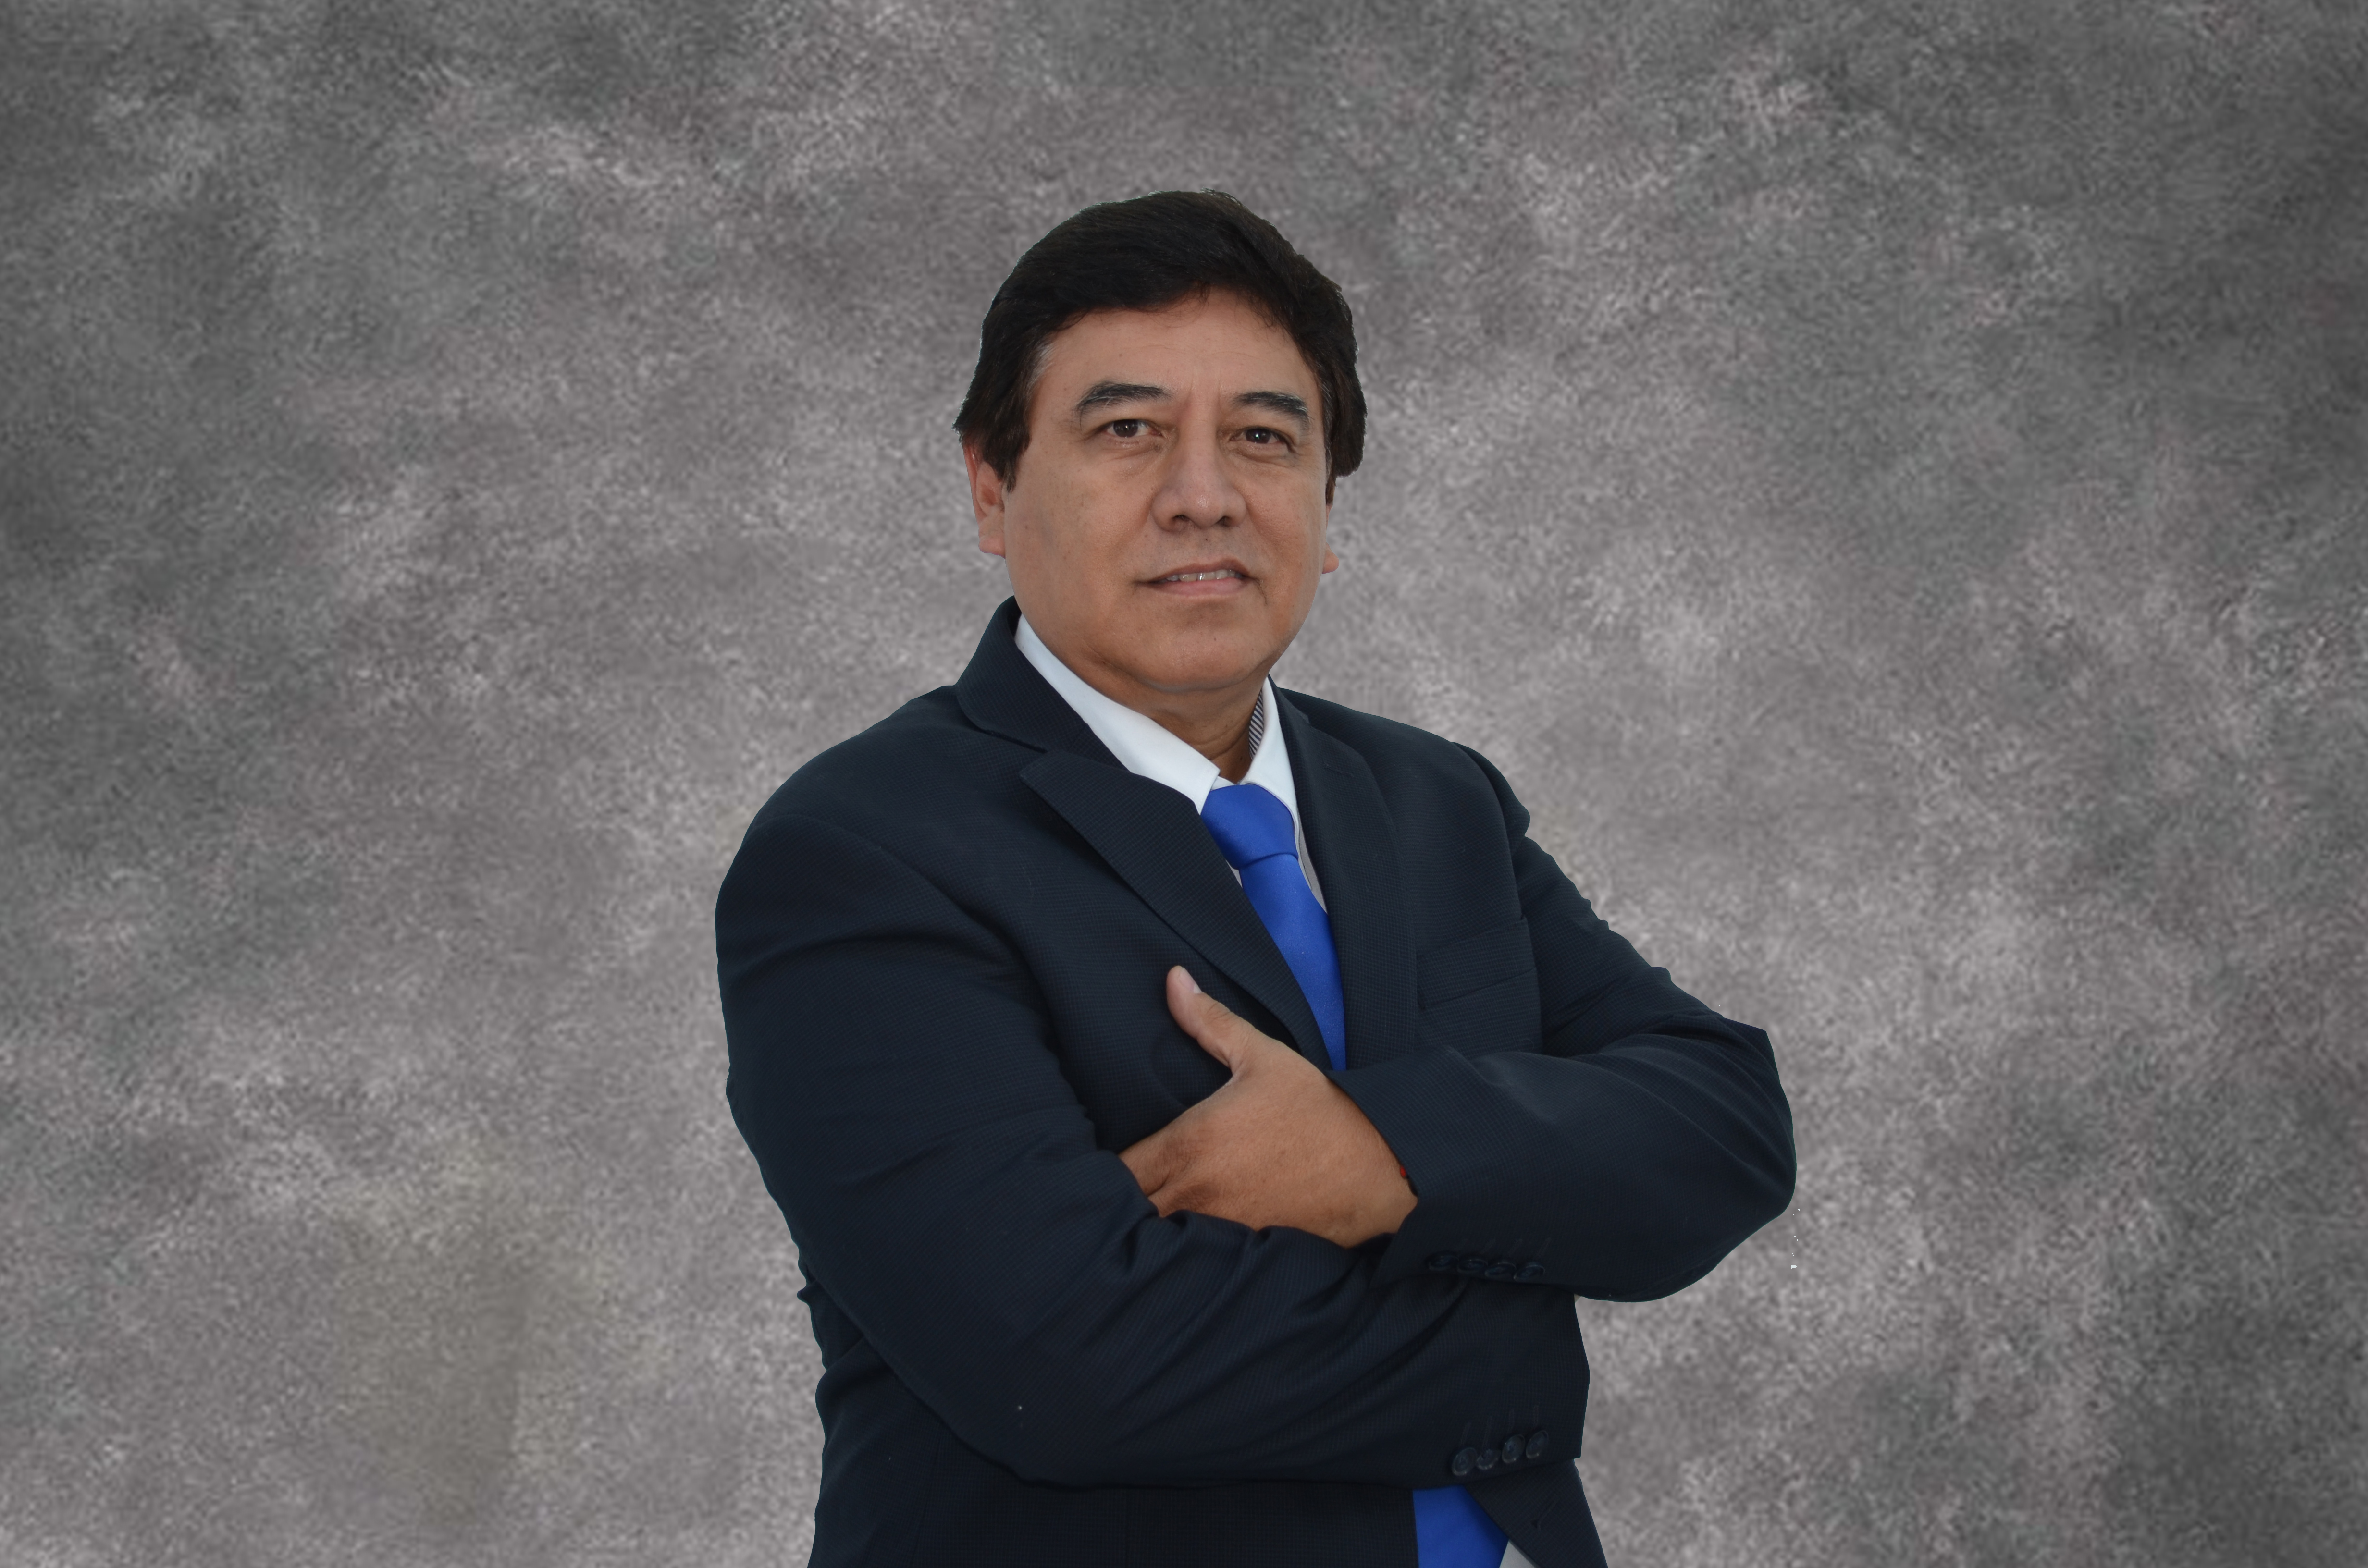 Dr. Luis Ernesto Elizalde Herrera